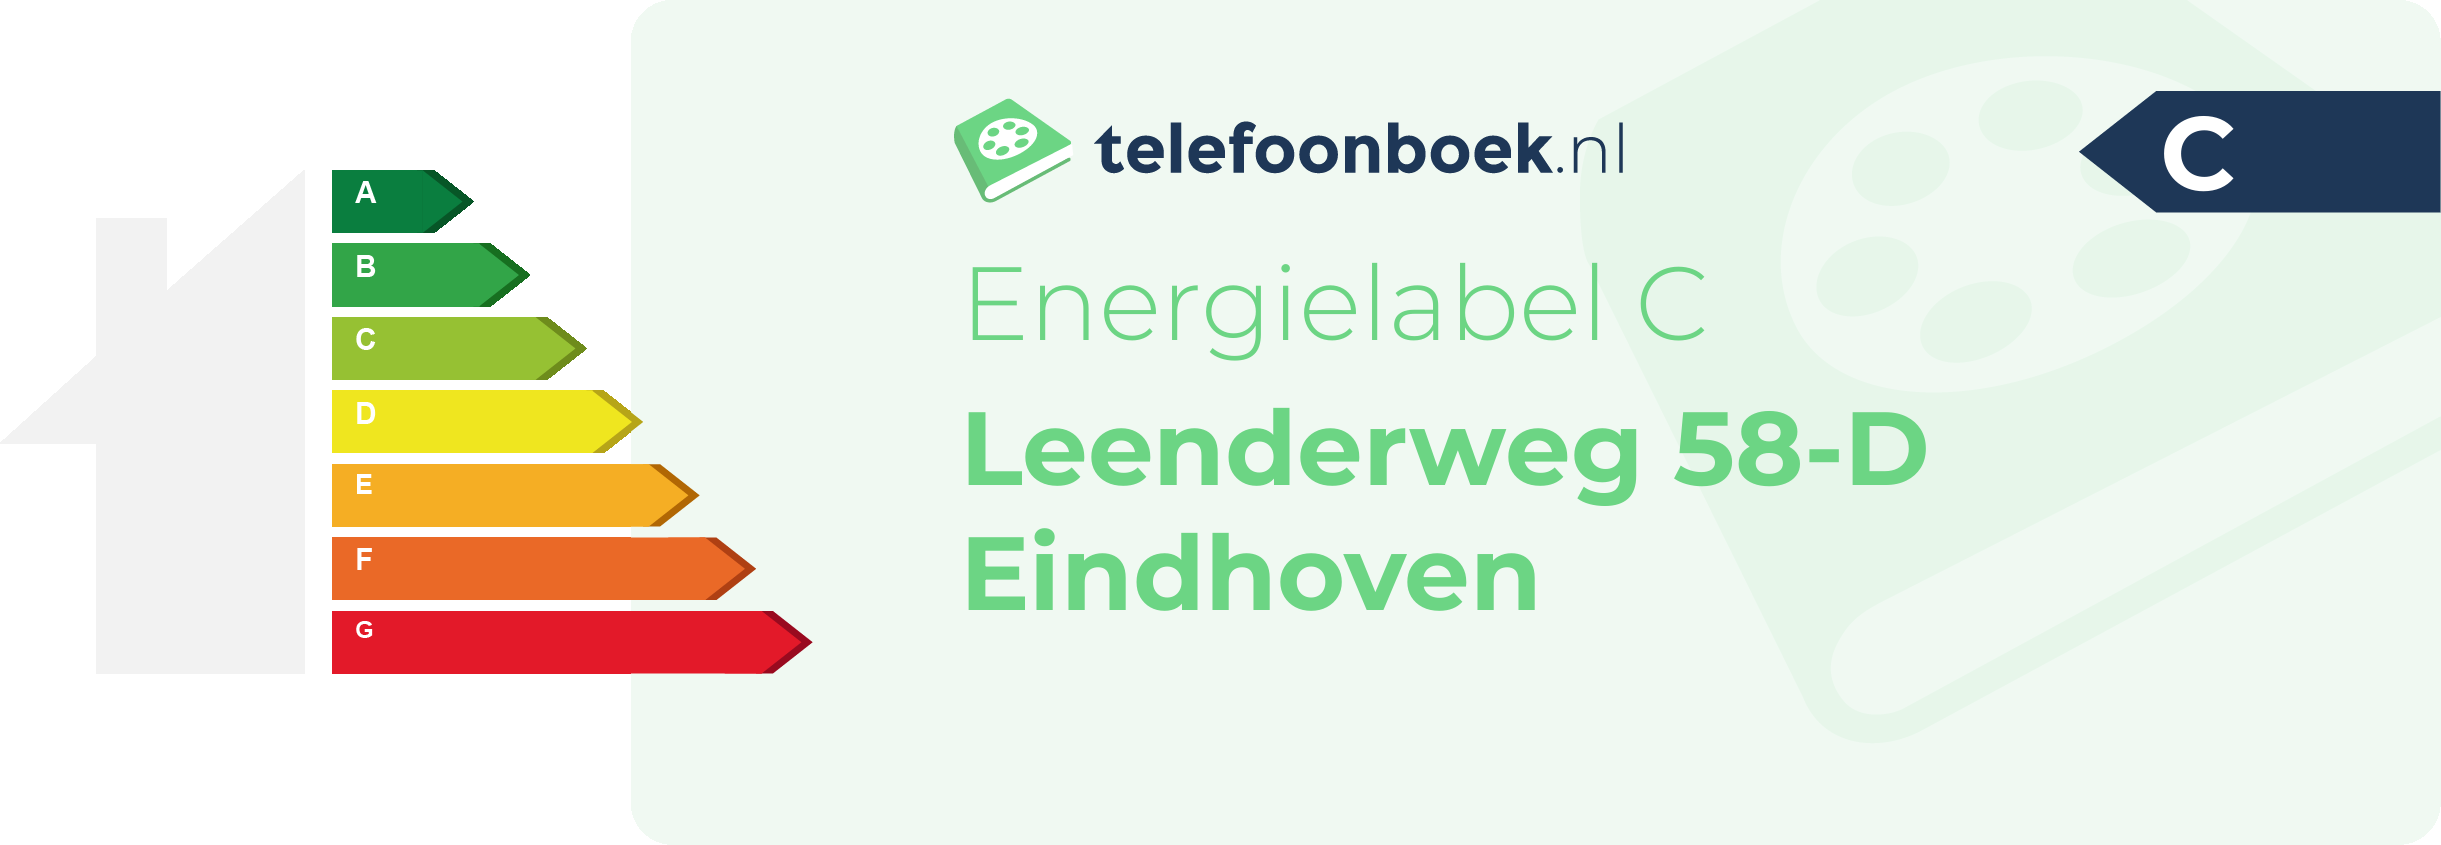 Energielabel Leenderweg 58-D Eindhoven